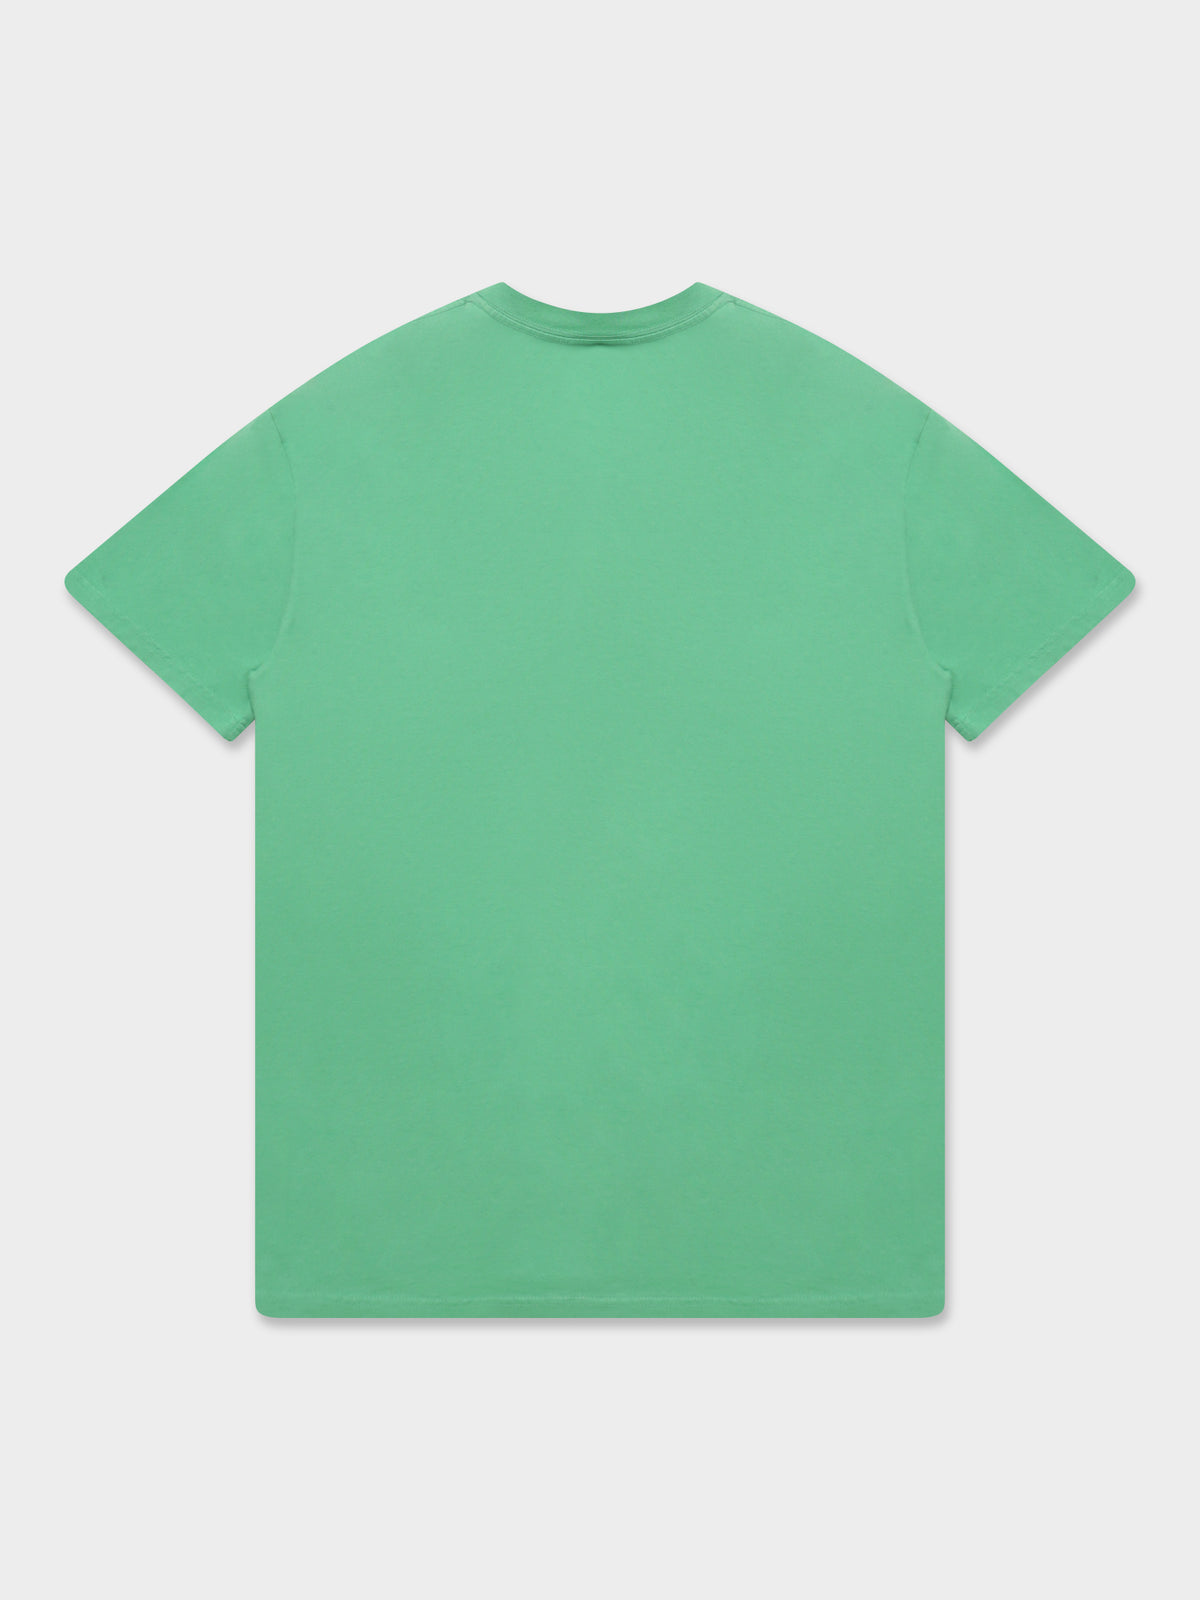 Athletics 50/50 T-Shirt in Green